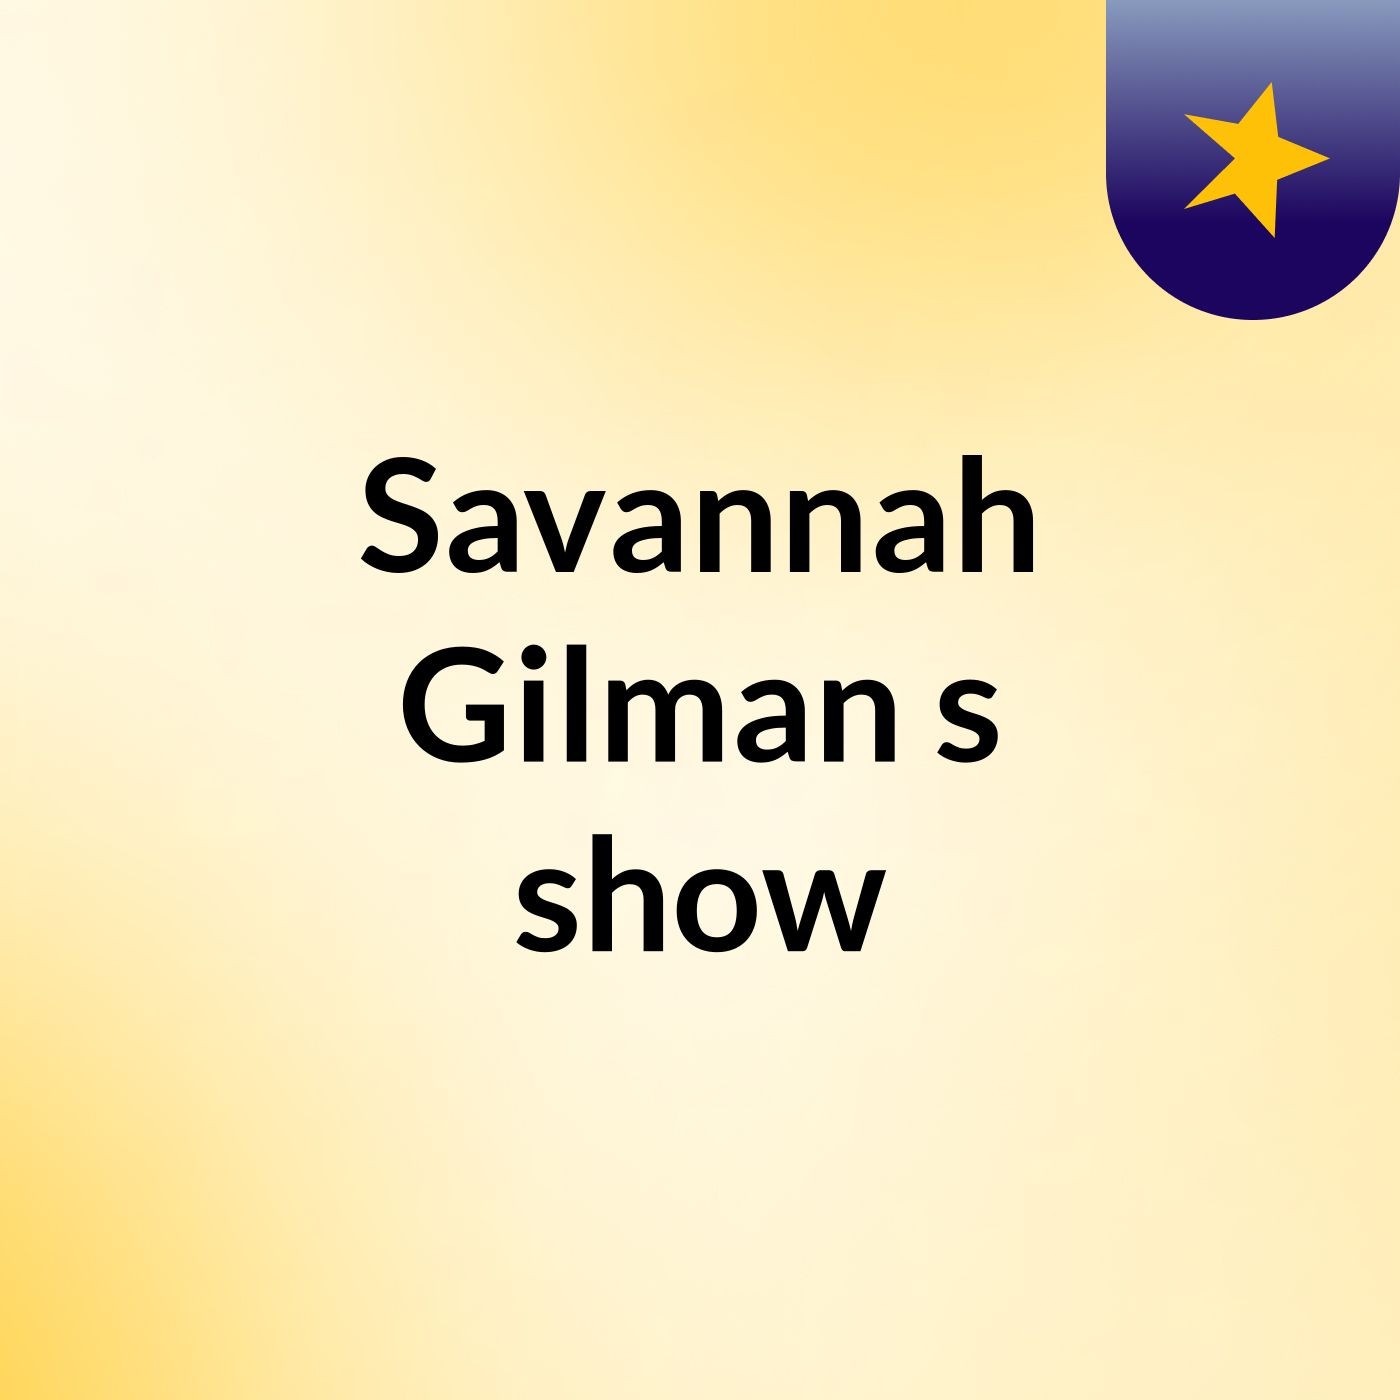 Savannah Gilman's show